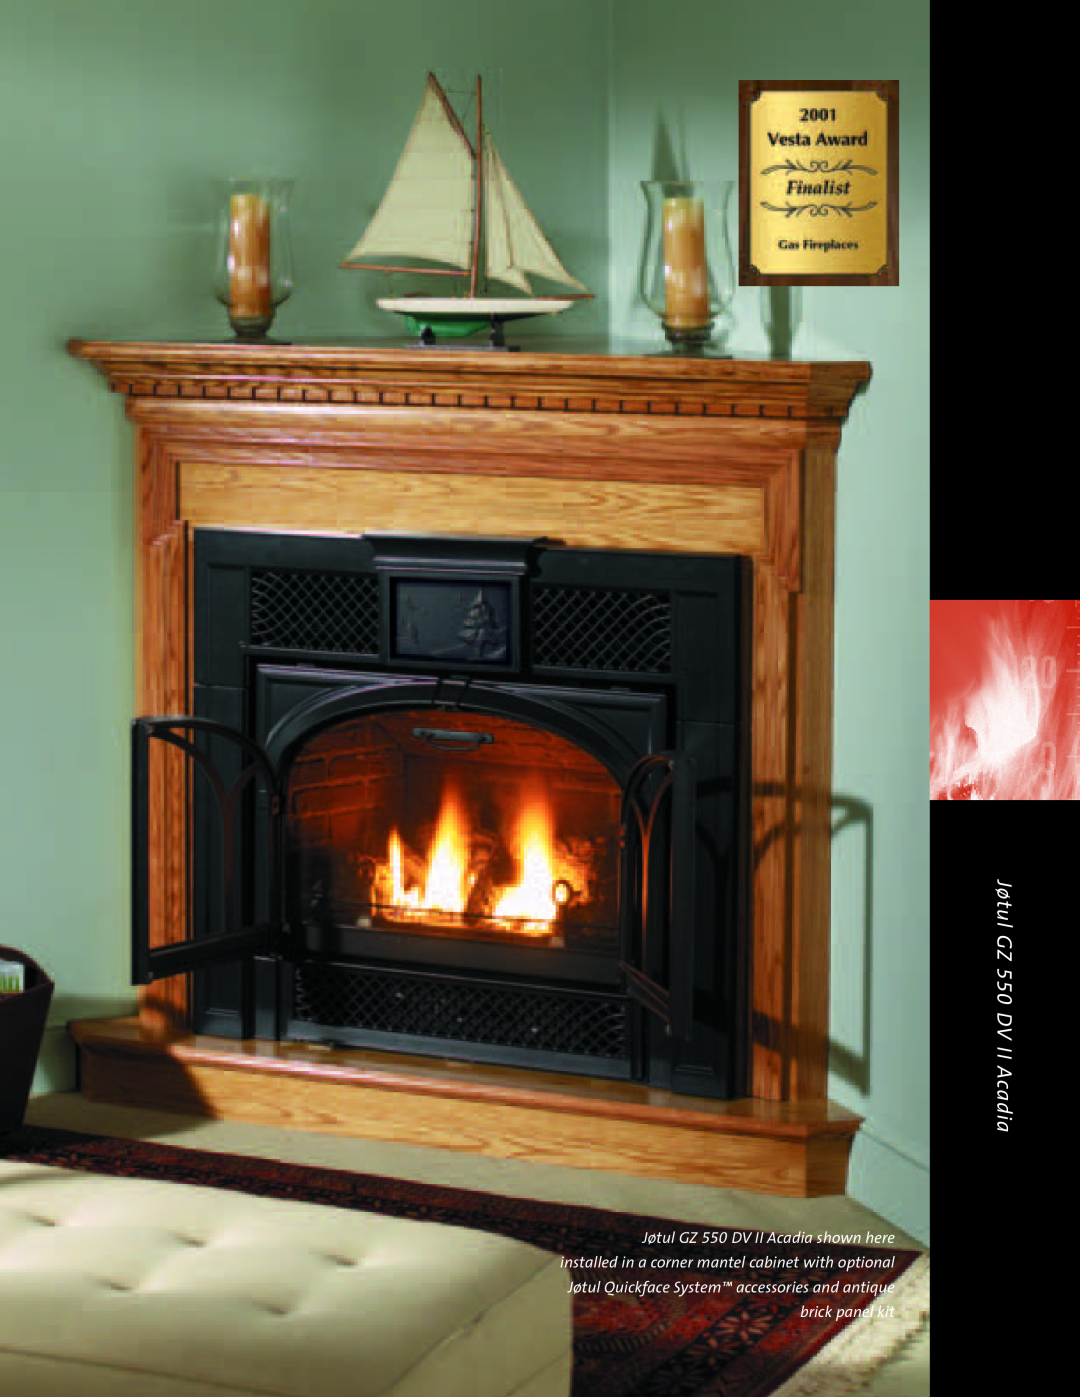 Jotul Gas Inserts and Fireplaces brochure Jøtul GZ 550 DV II Acadia 